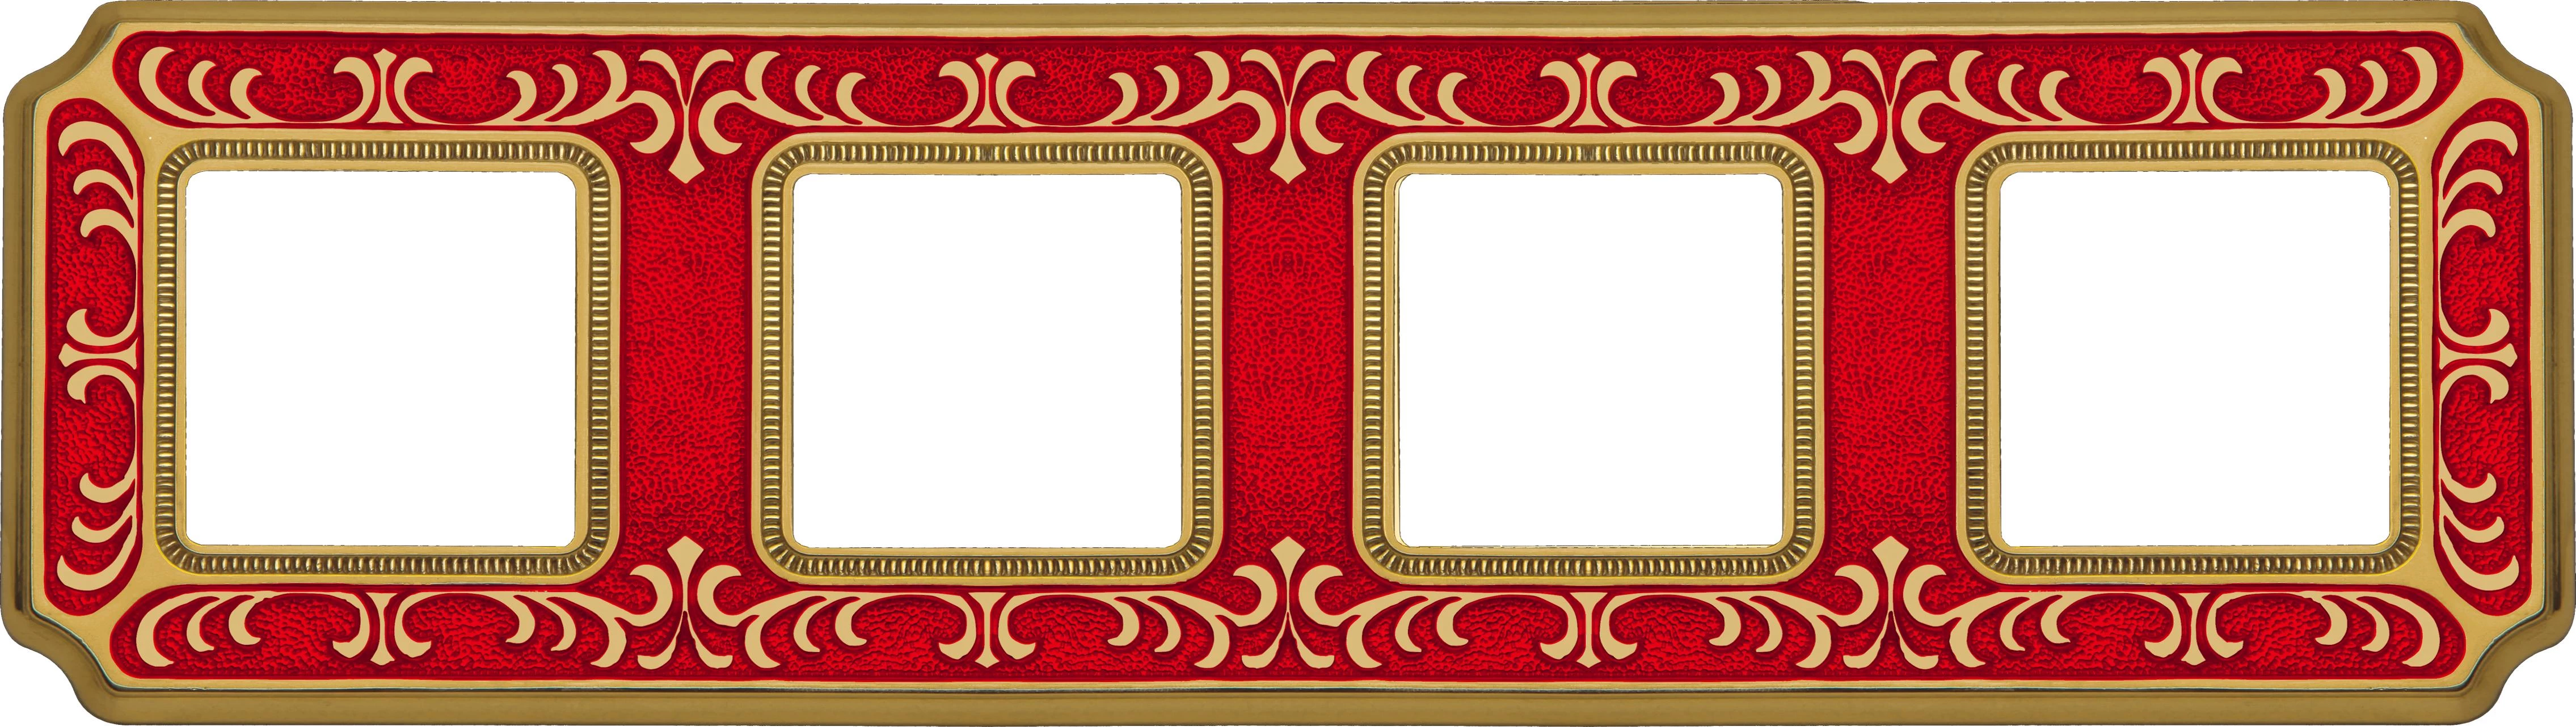  артикул FD01354ROEN название Рамка 4-ая (четверная), цвет Рубиново-красный, Siena, Fede